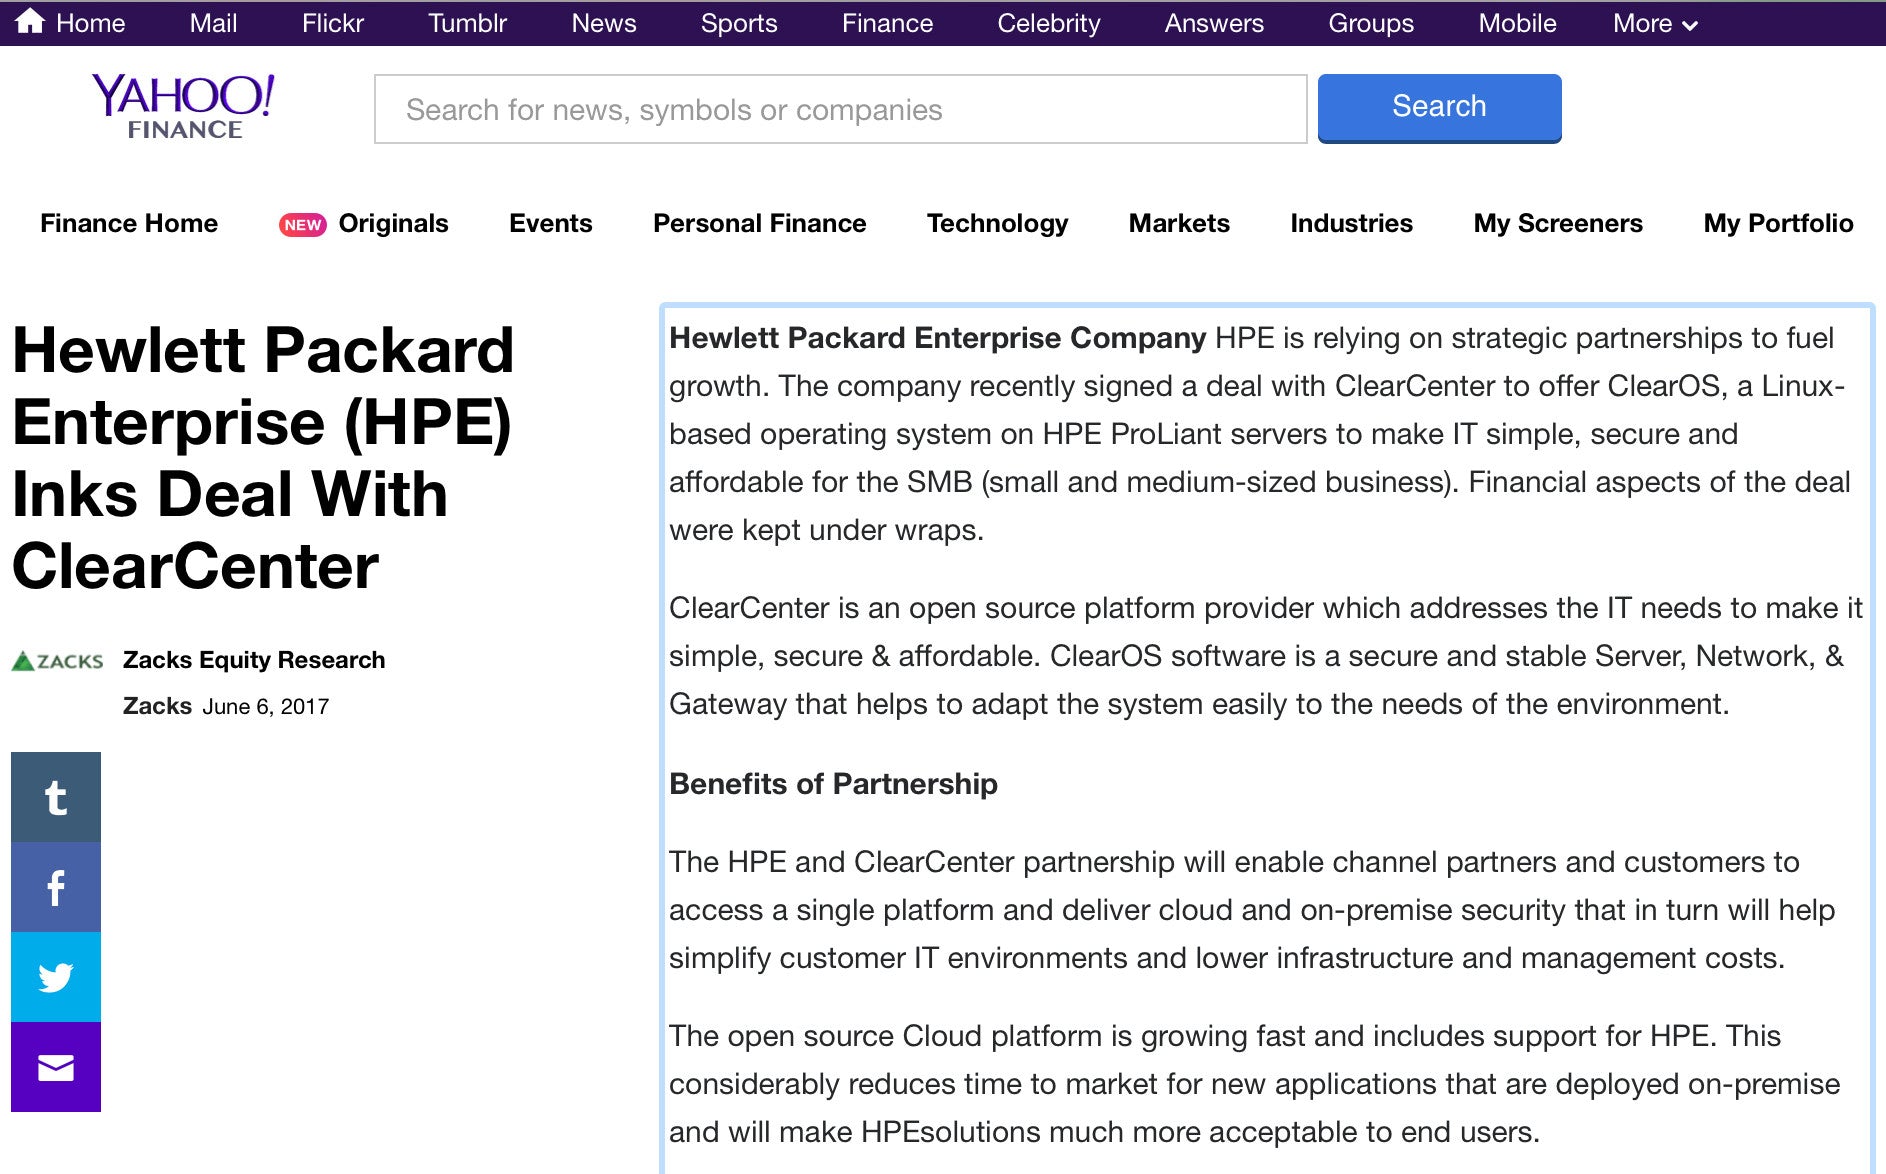 Hewlett Packard Enterprise (HPE) Inks Deal With ClearCenter